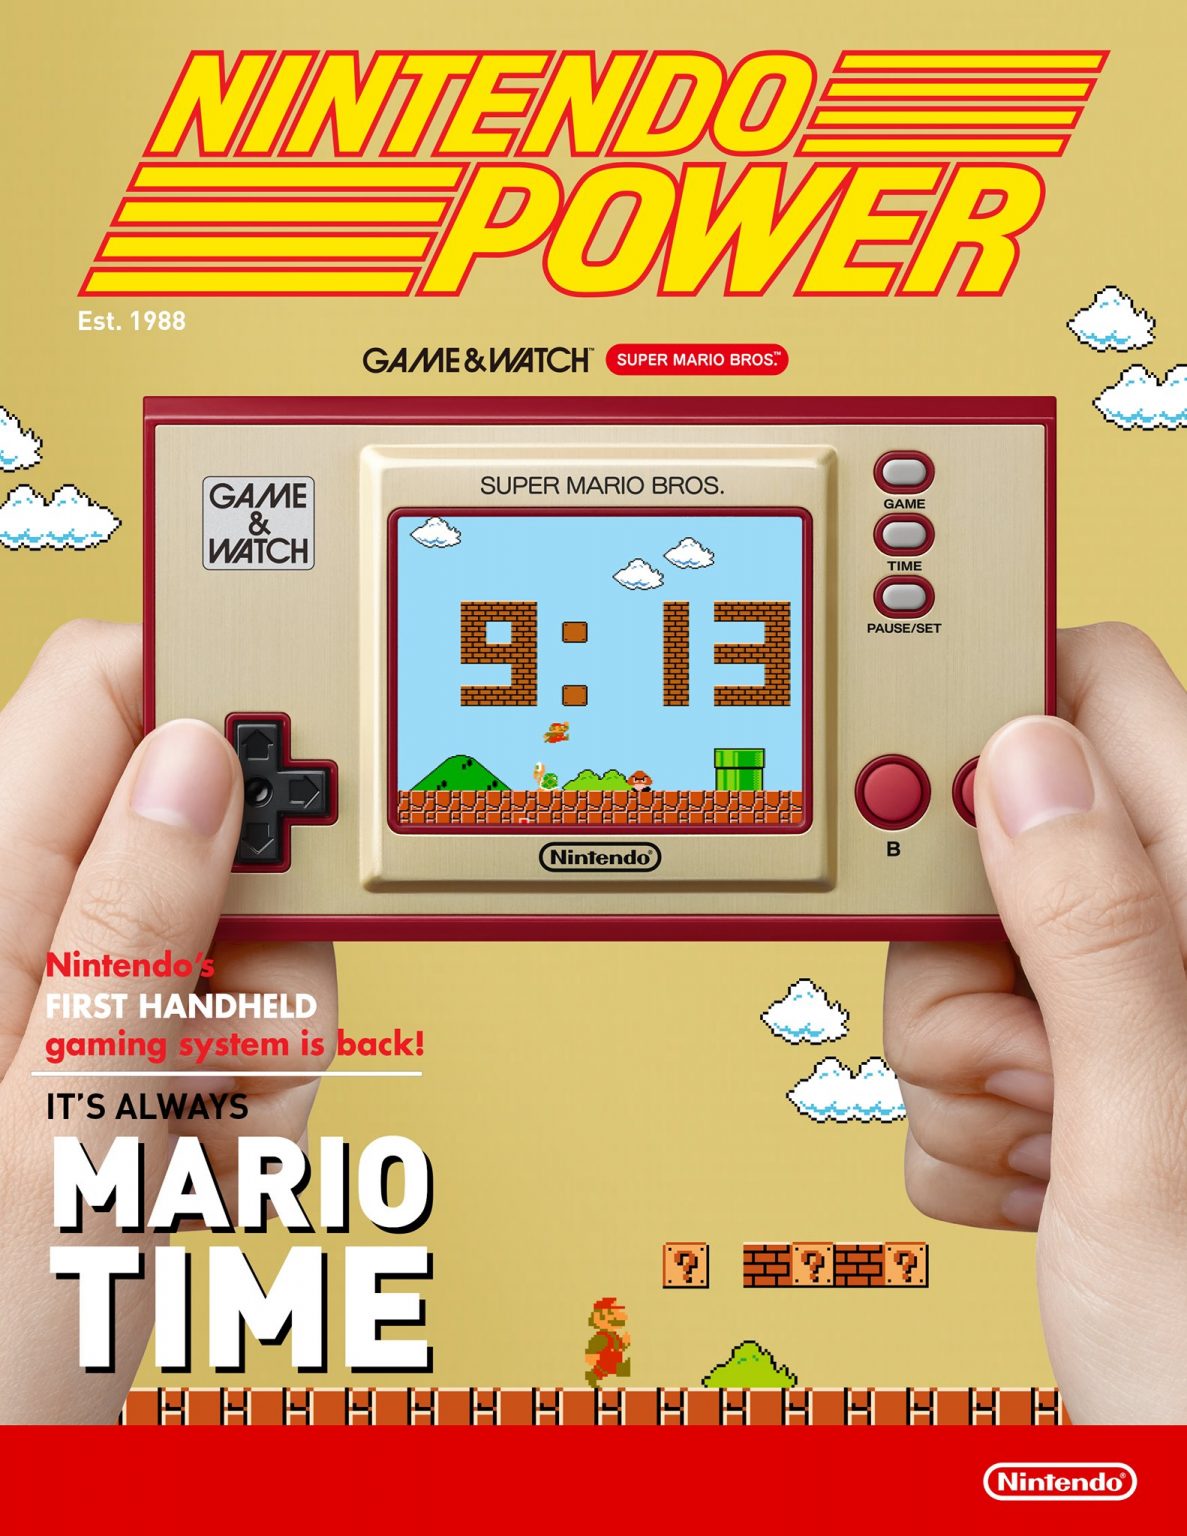 Nintendo is getting nostalgic with its Nintendo Power magazine cover mockup